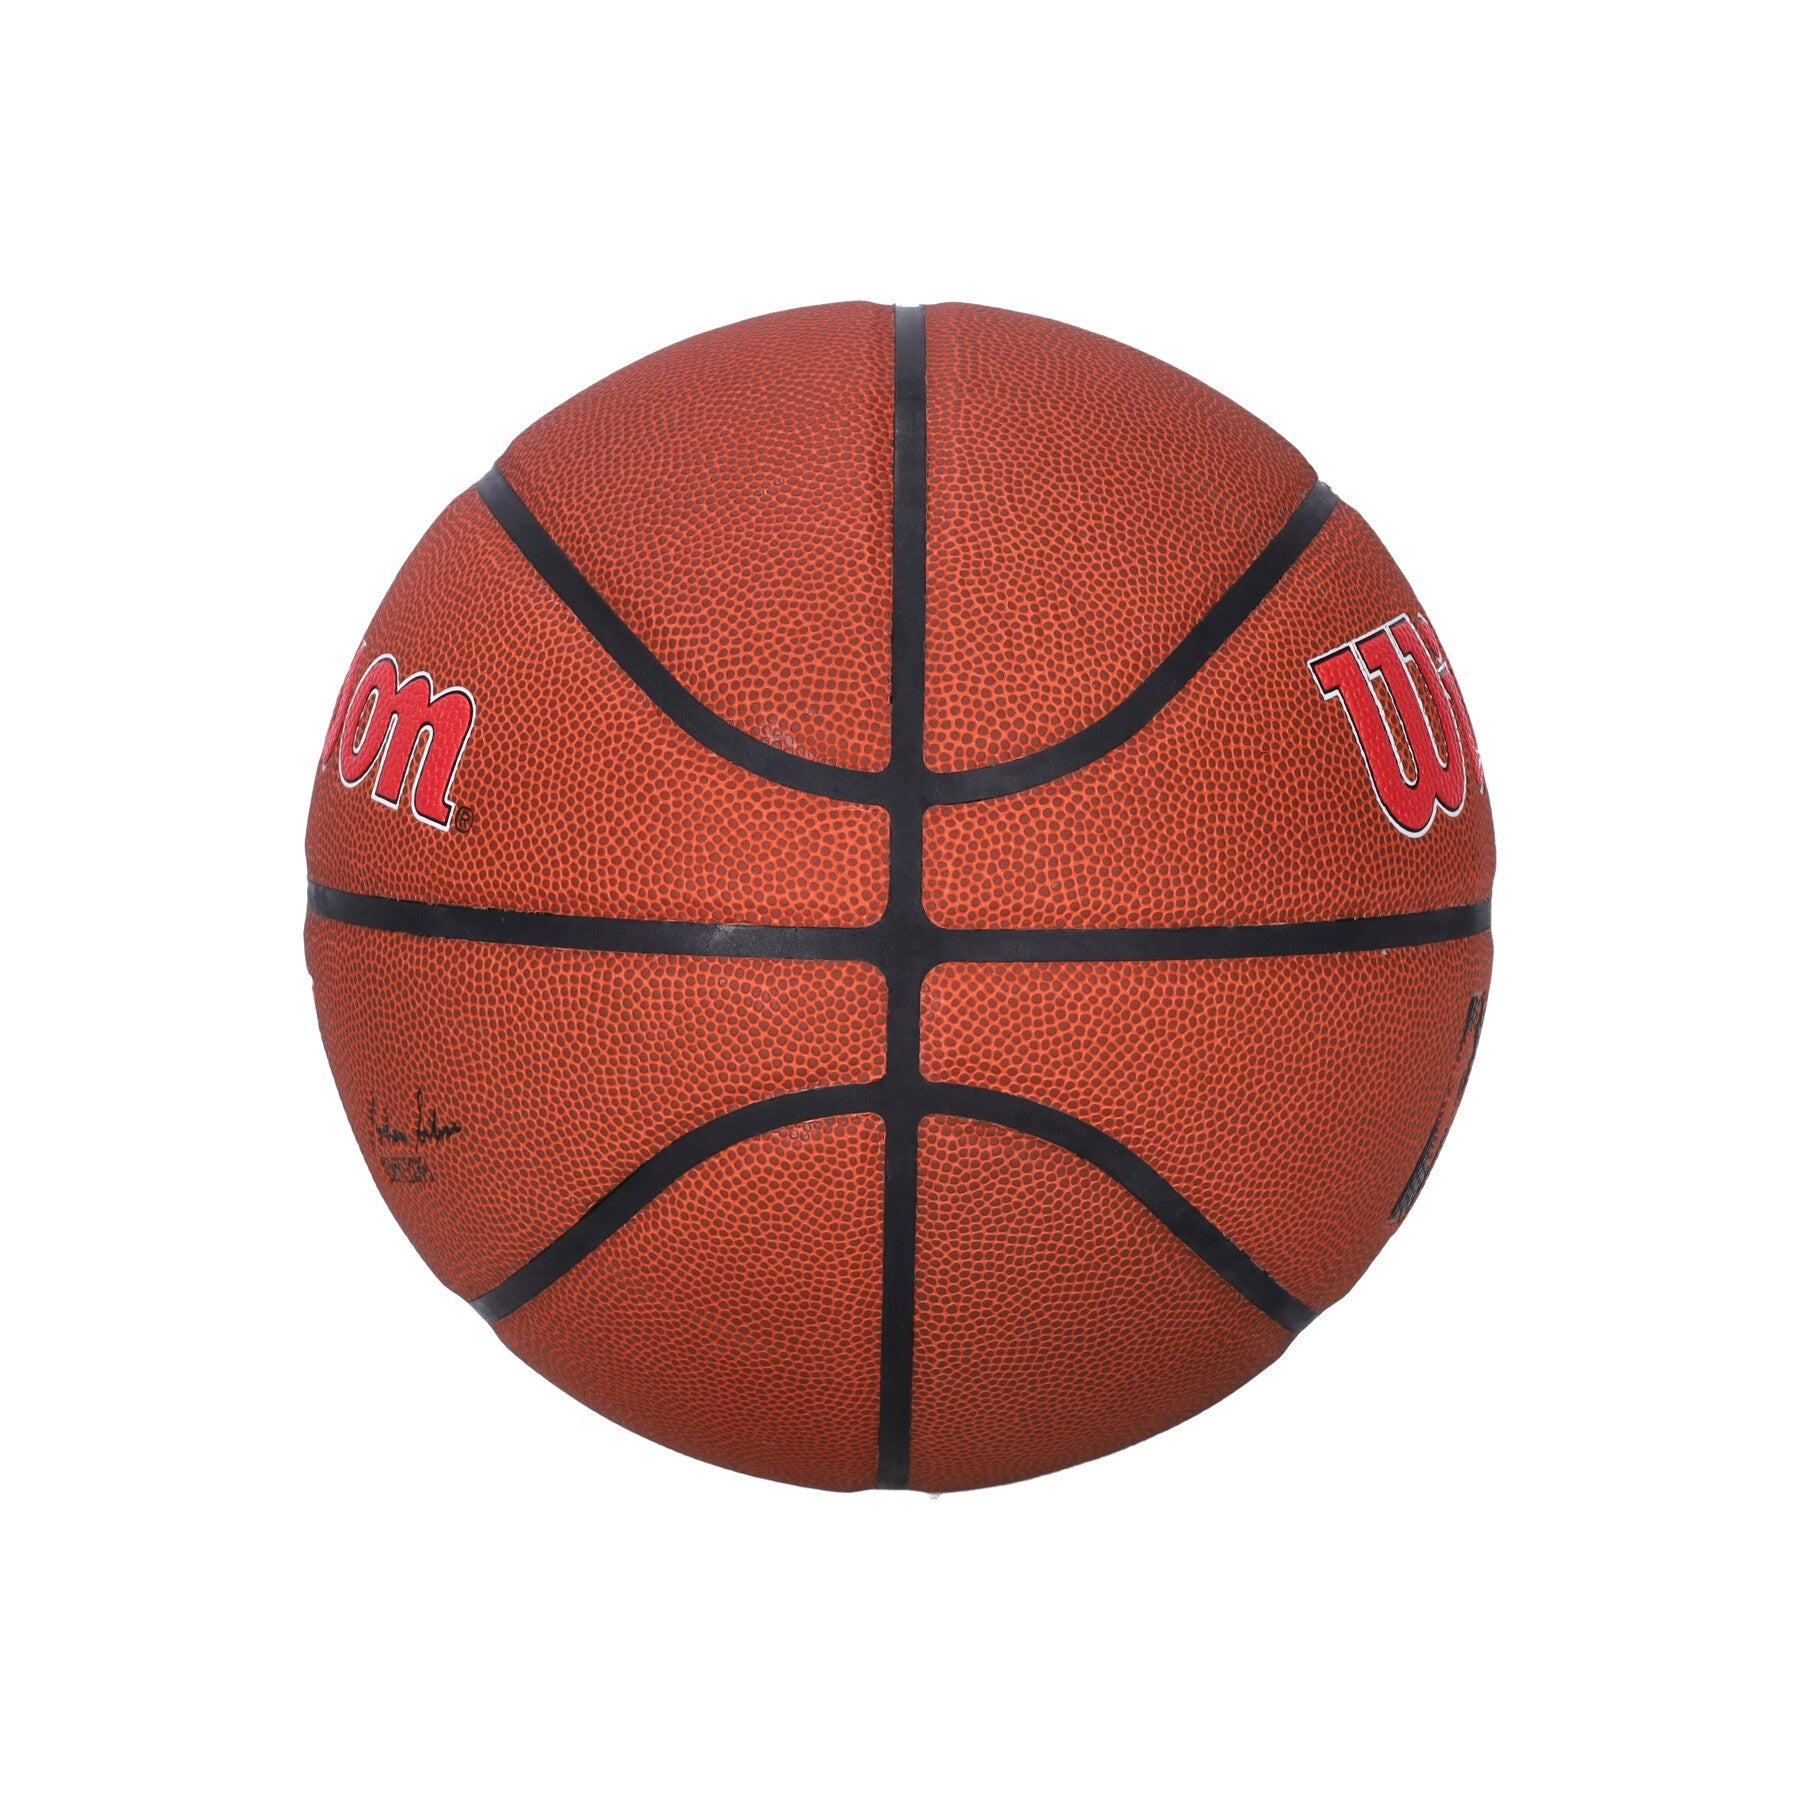 Pallone Uomo Nba Team Alliance Basketball Size 7 Porbla Brown/original Team Colors WTB3100XBPOR